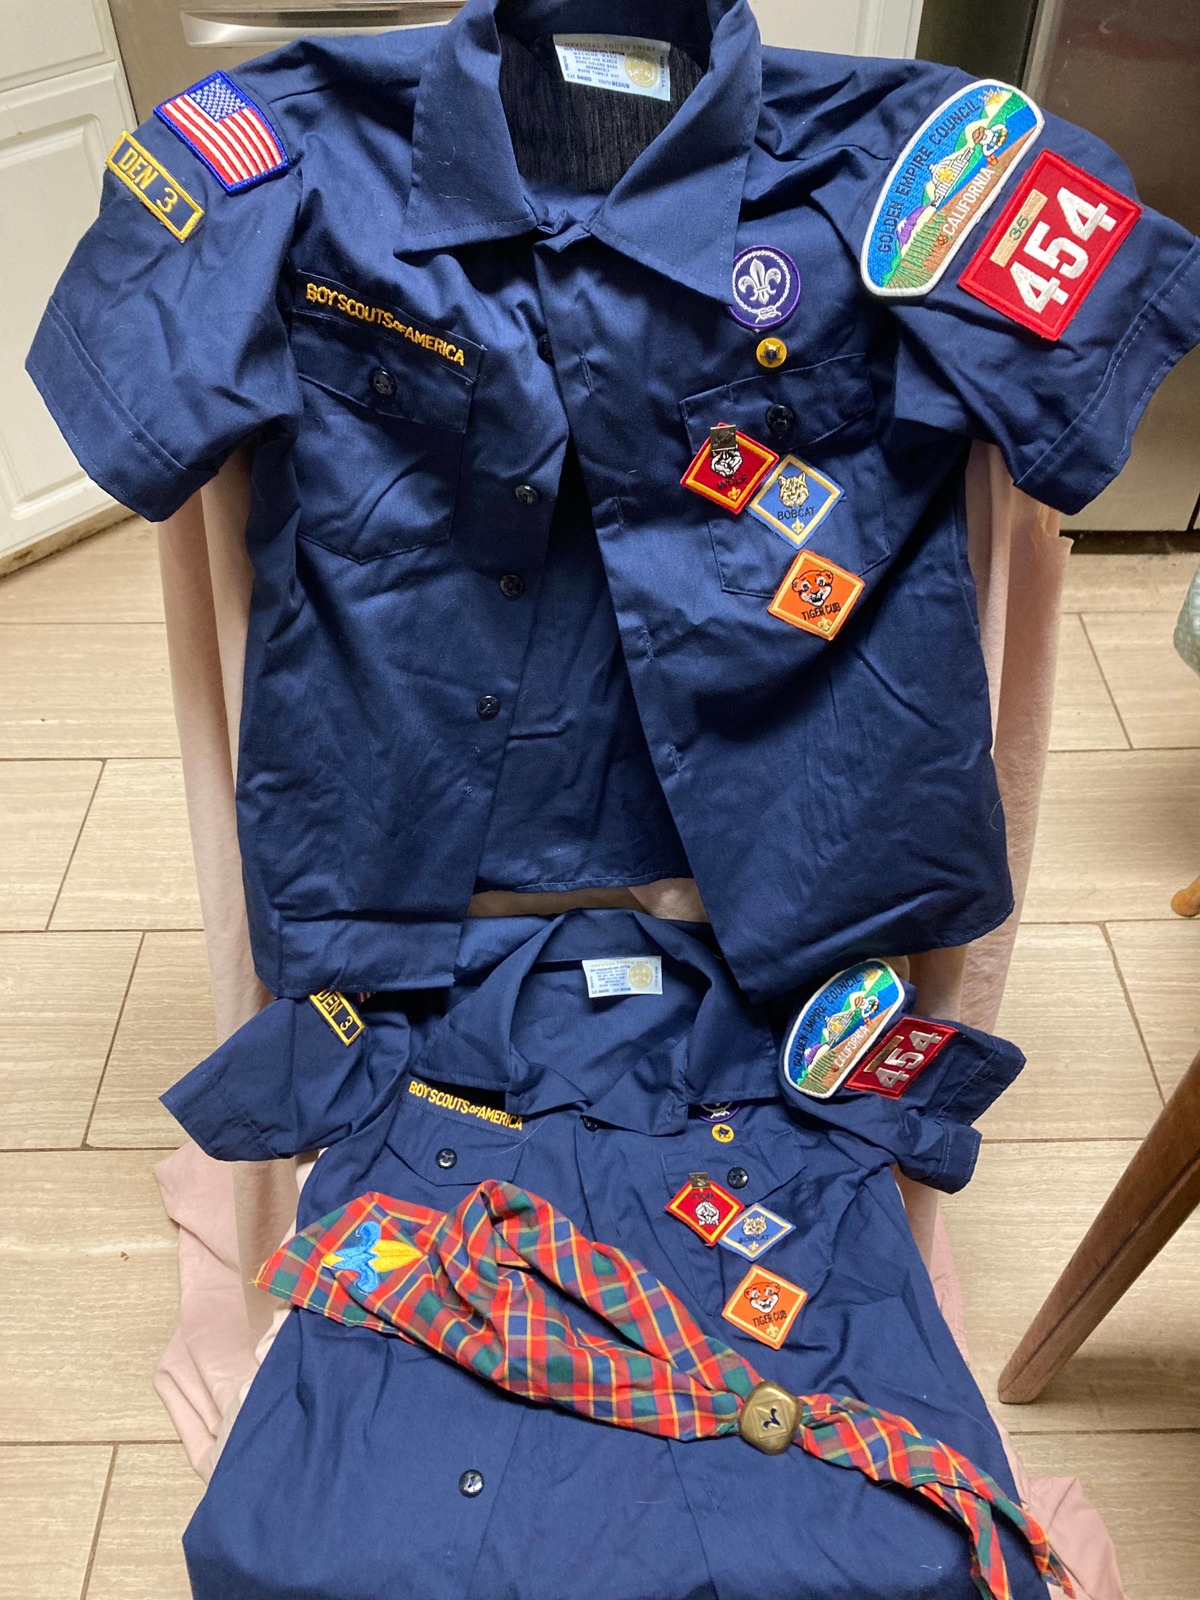 Boy Scouts of America Uniform Shirt Size M Navy Blue W/ Patches & handkerchief - $29.70